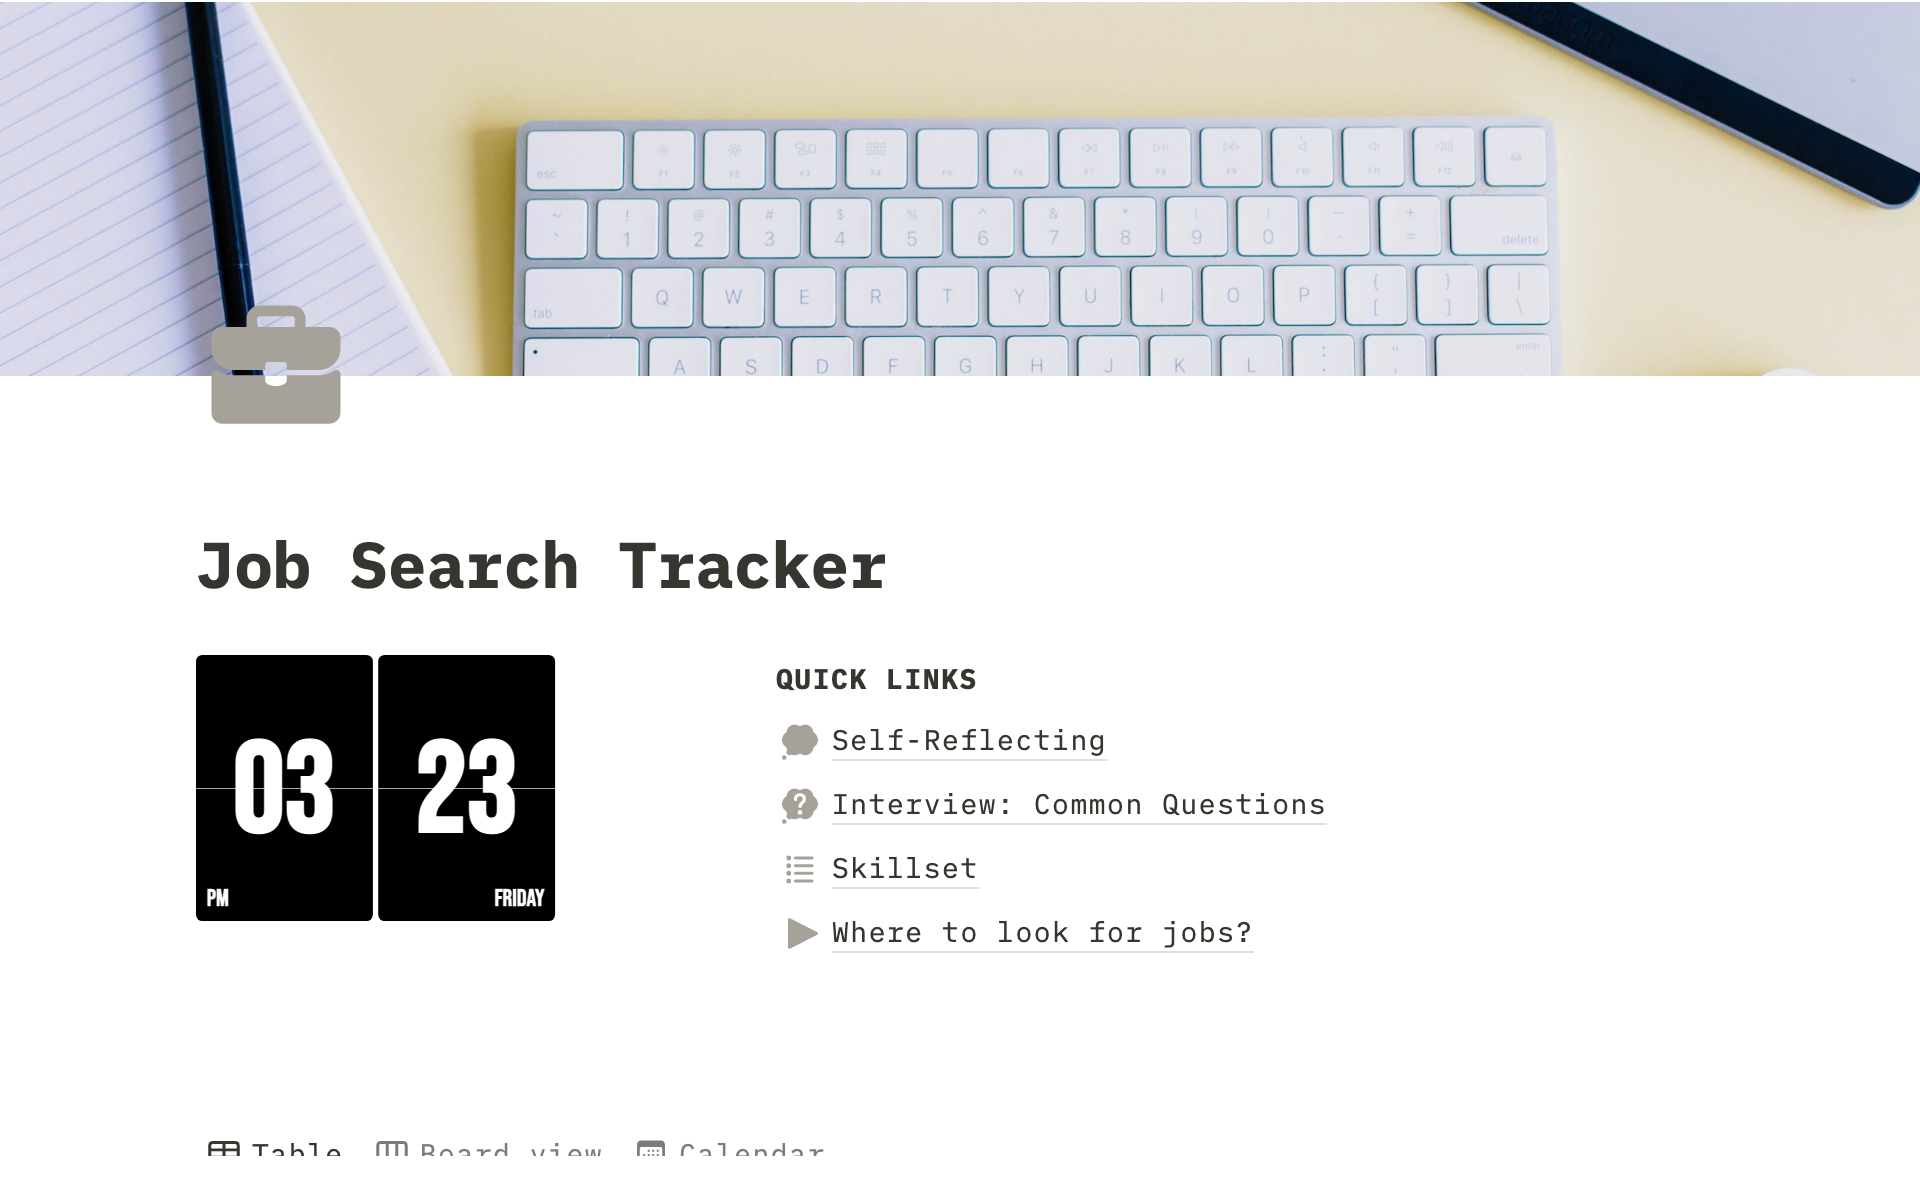 Aperçu du modèle de Job Search Tracker